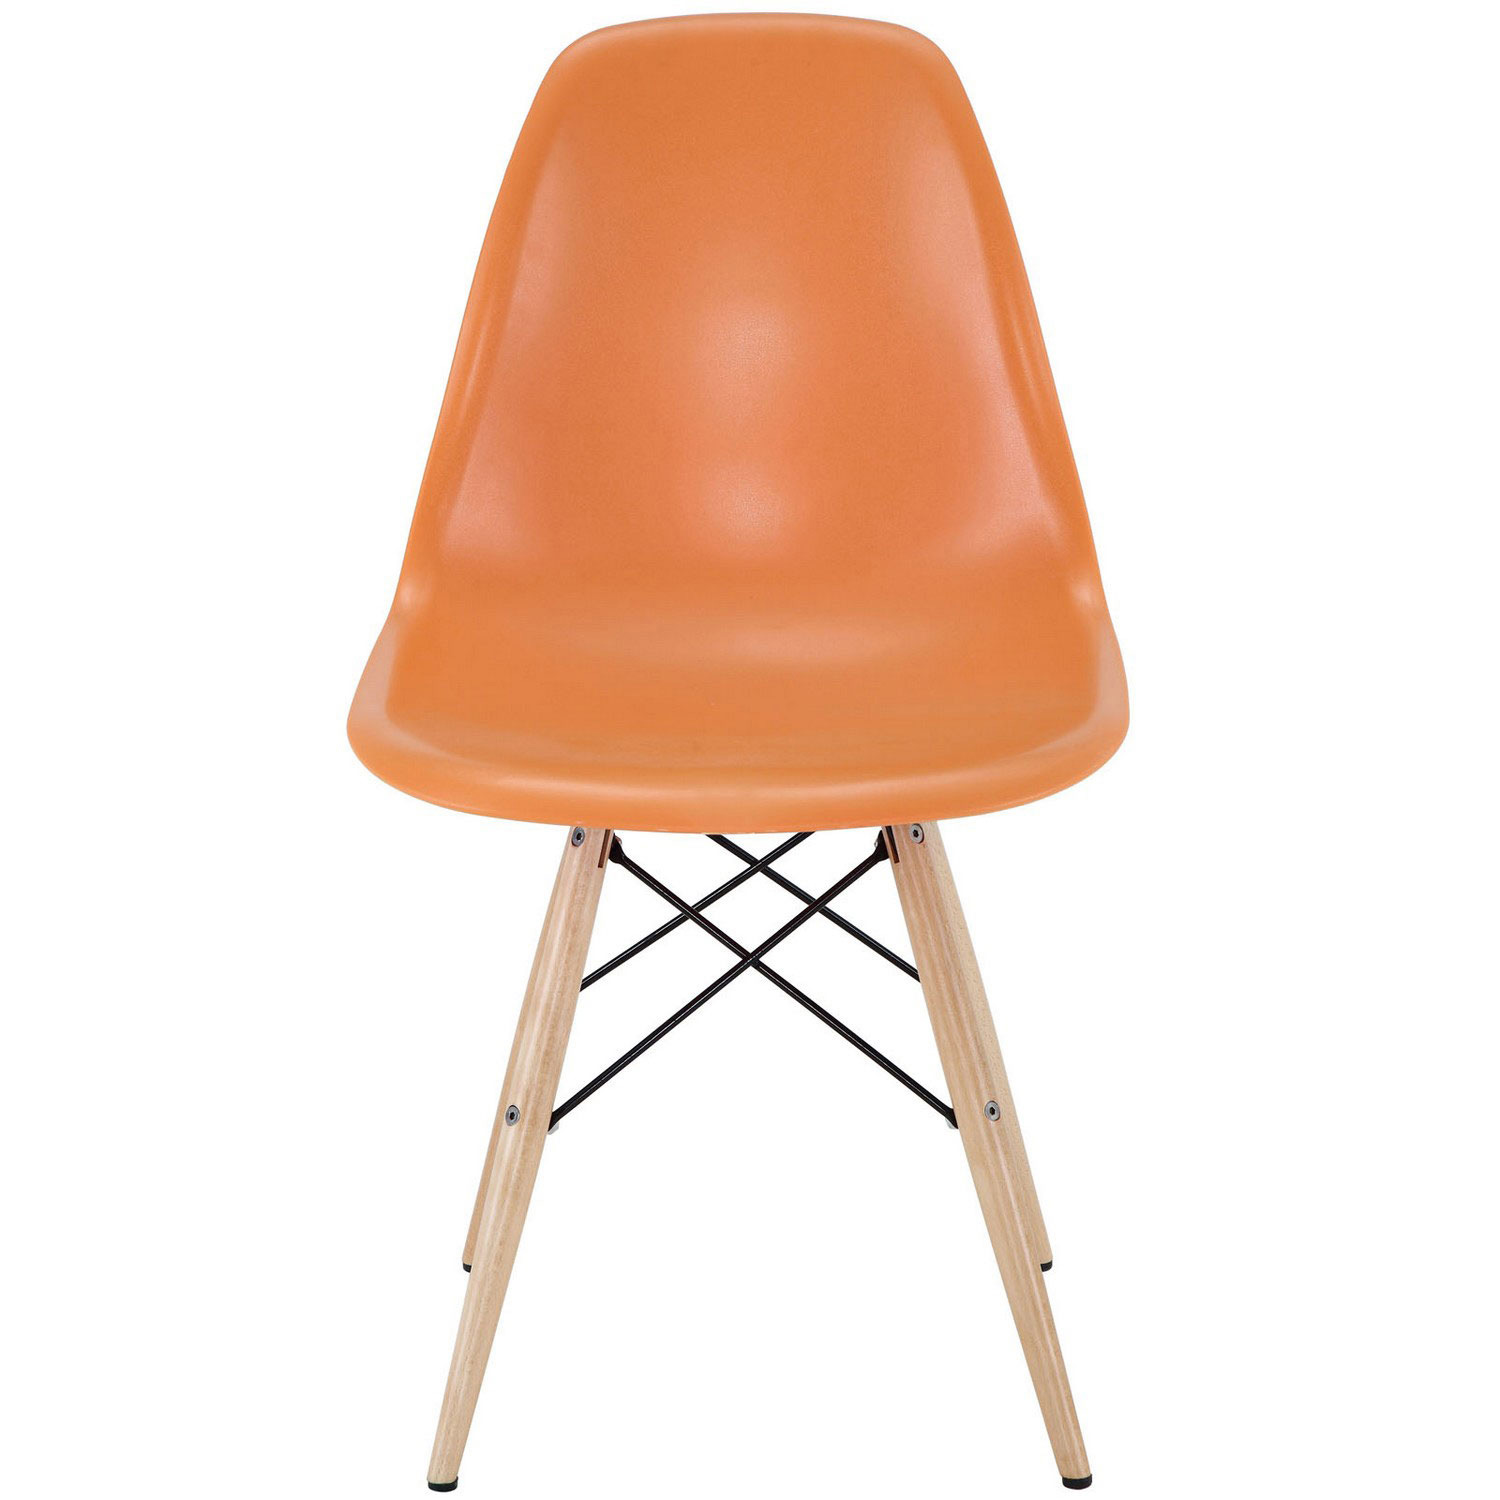 Modway Pyramid Dining Side Chair - Orange